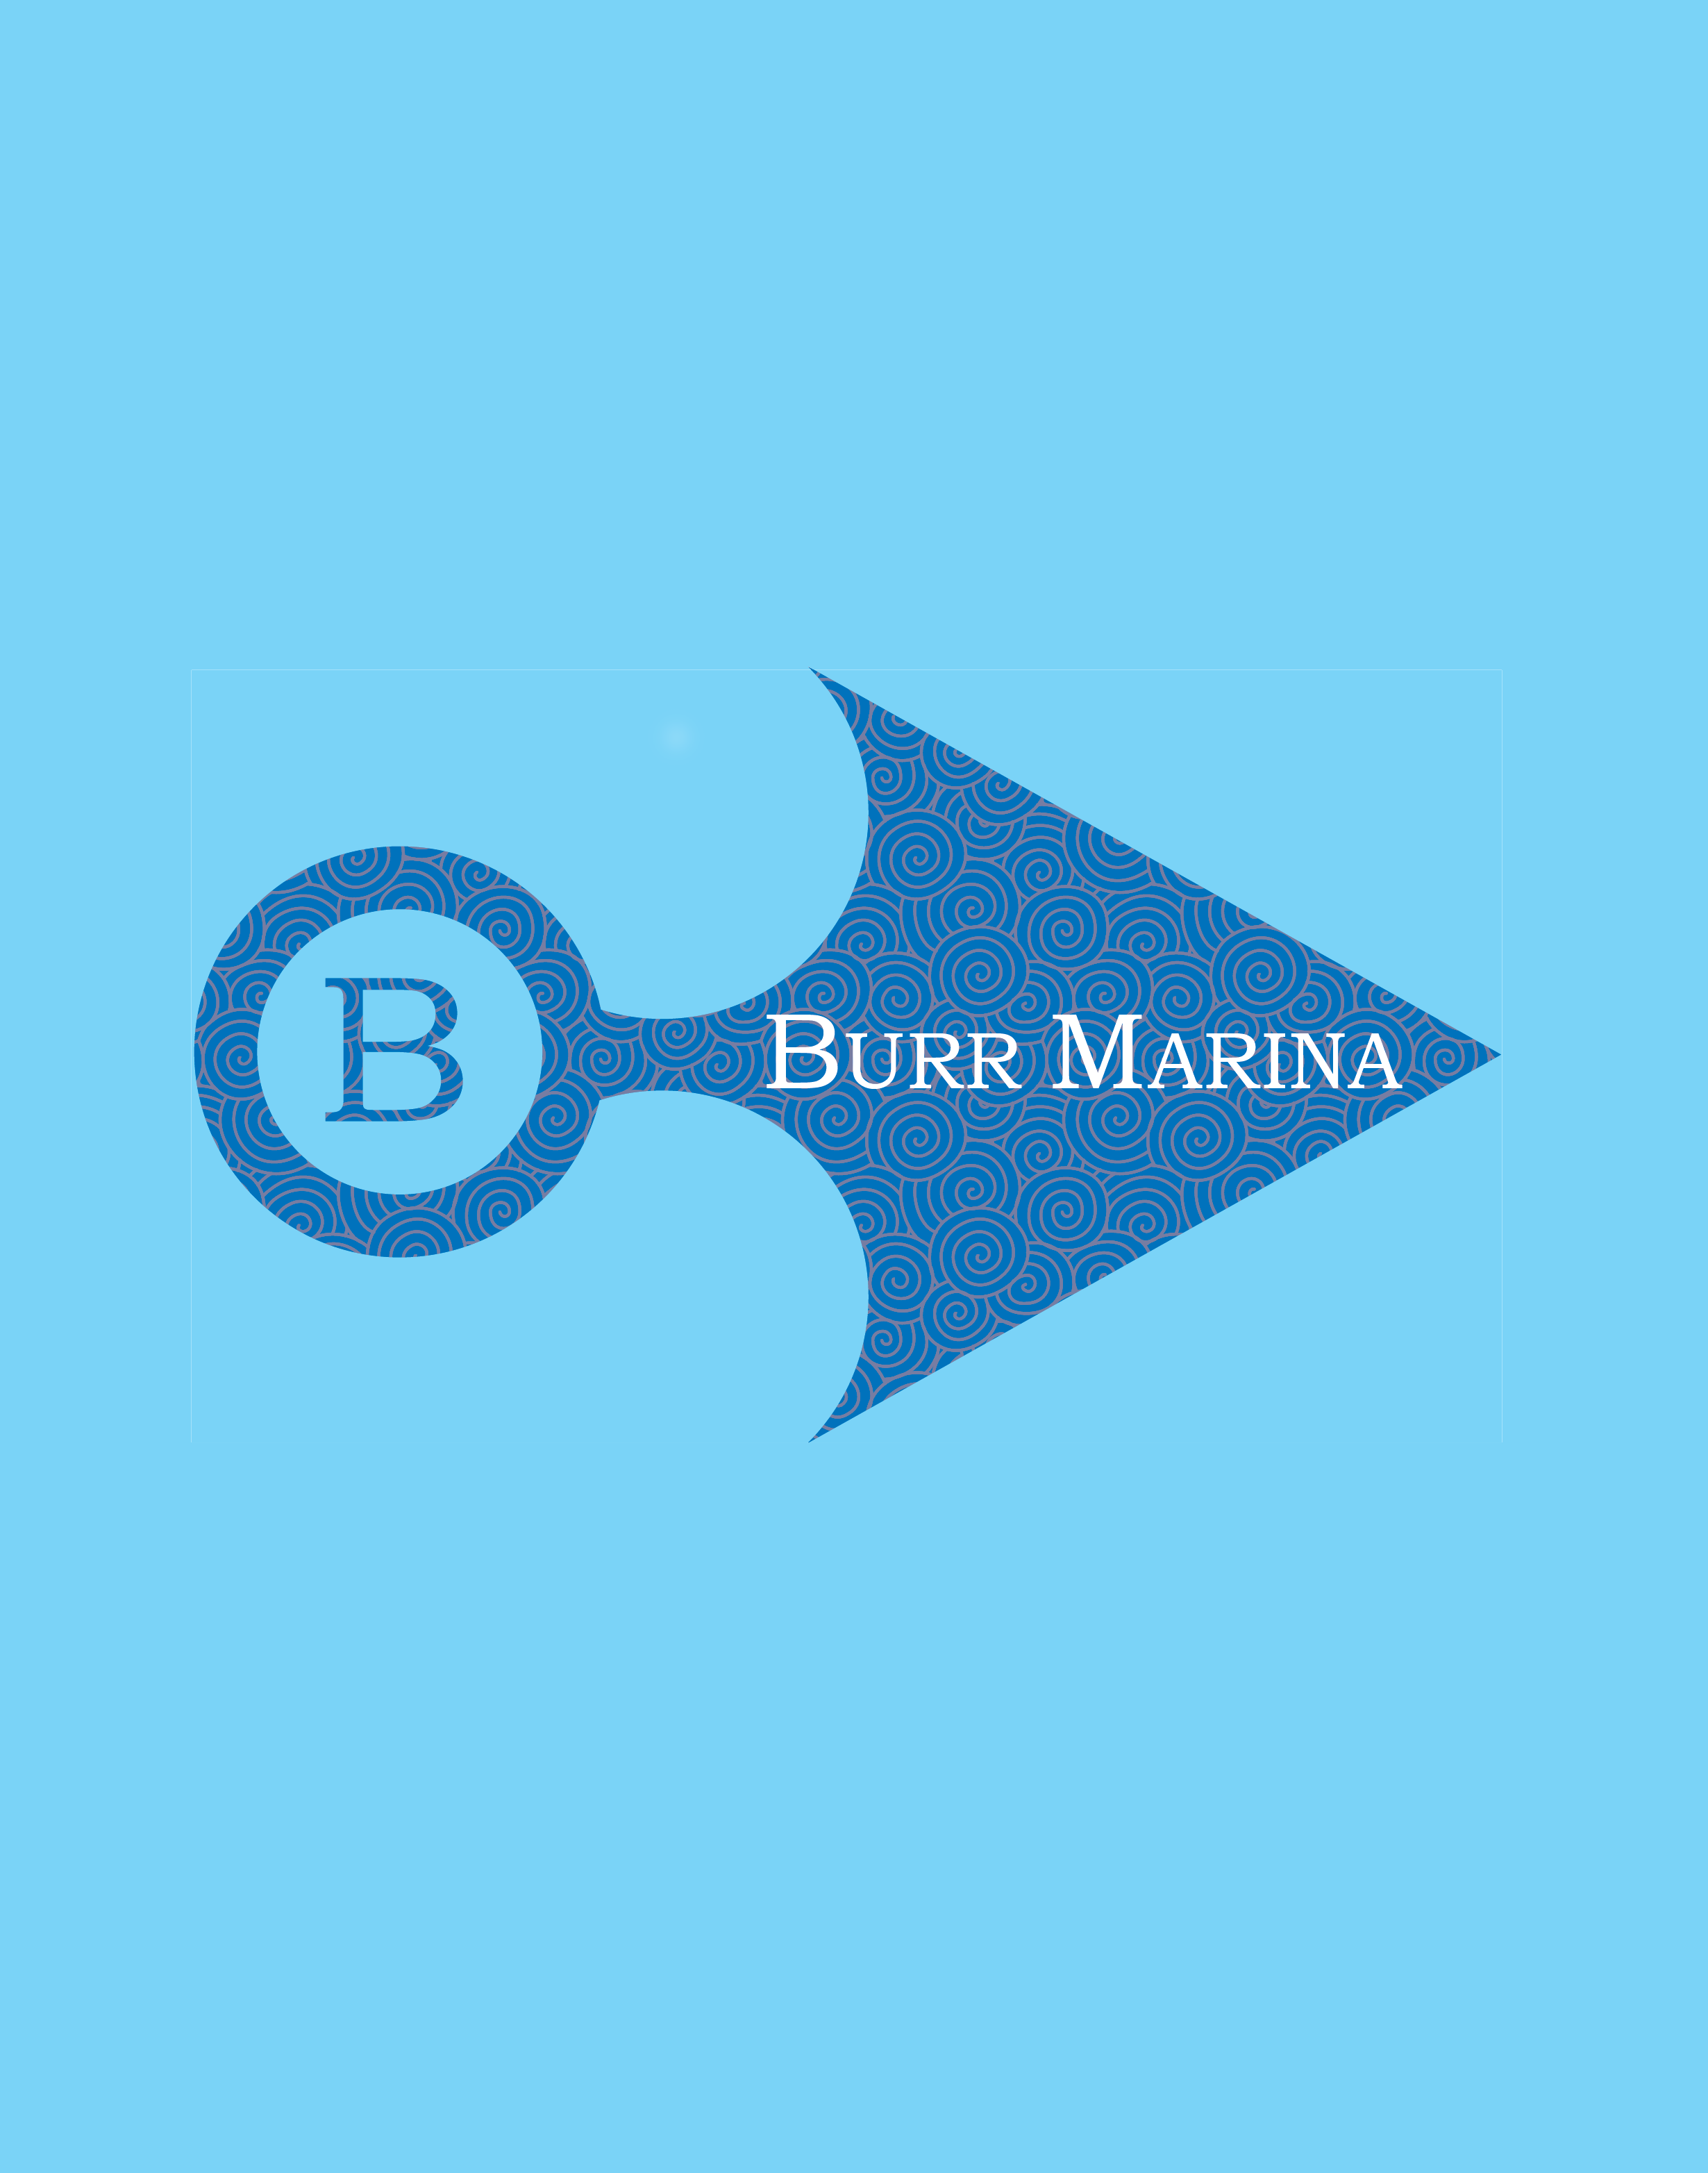 Burr Marina Graphic Art Logo Image